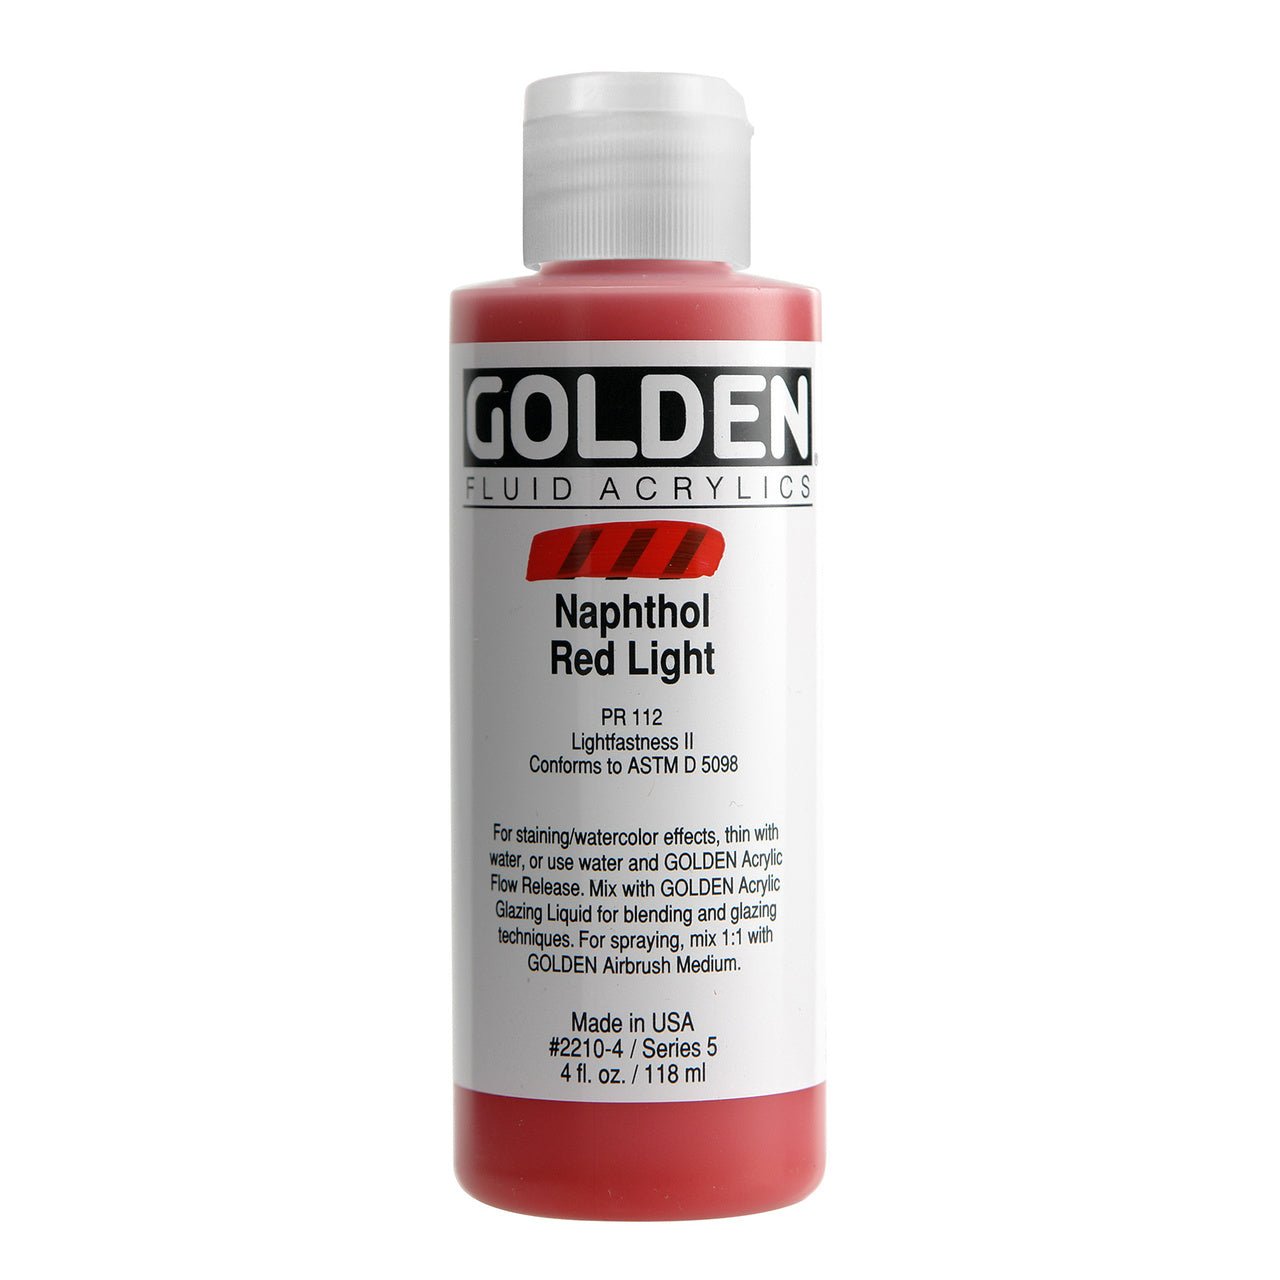 Golden Fluid Acrylic Naphthol Red Light 4 oz - merriartist.com